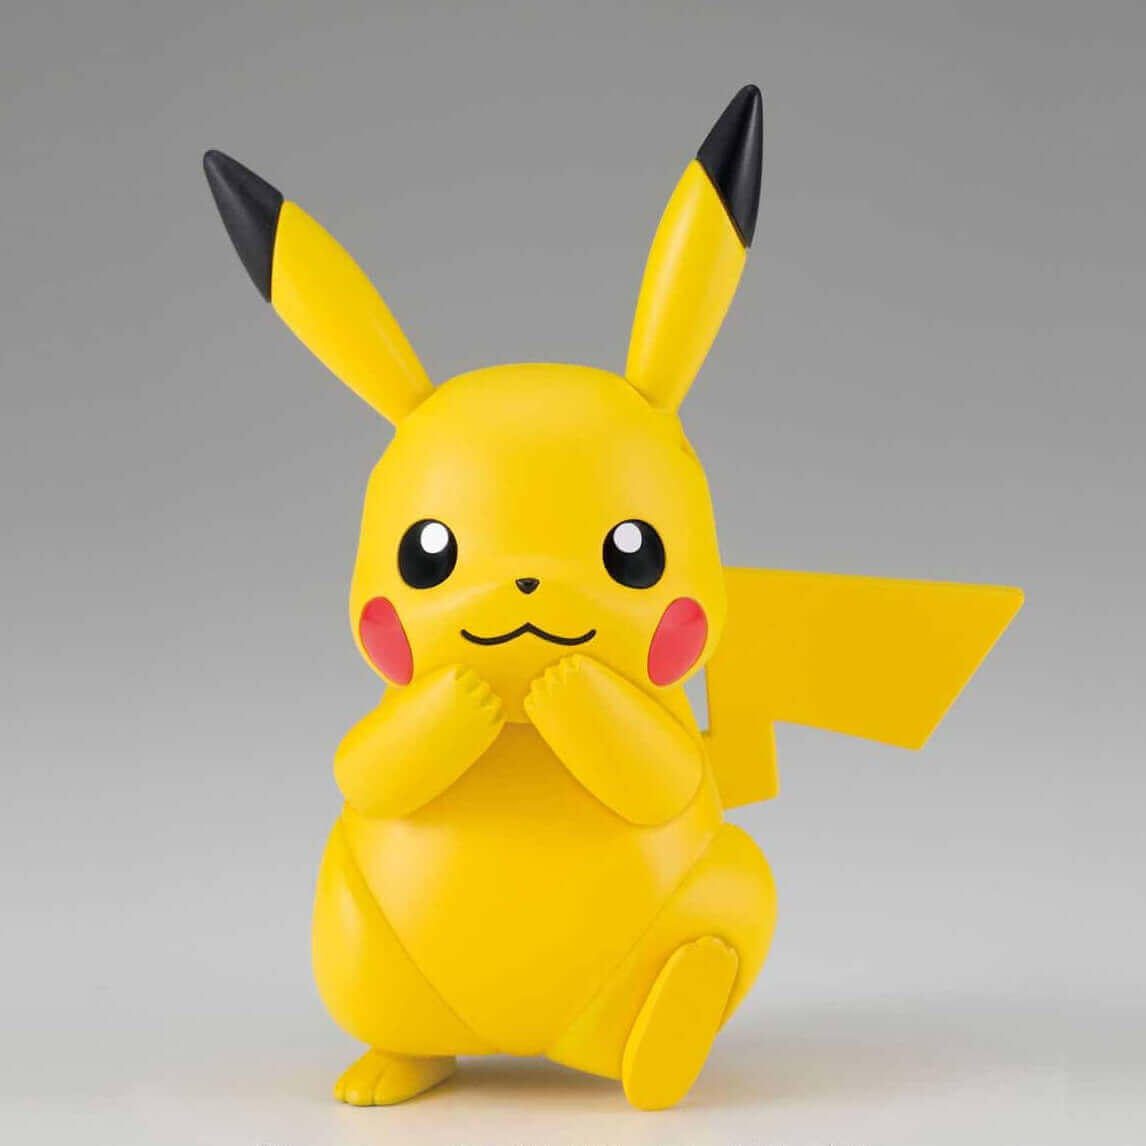 No.41 Pikachu Model kit - Pokémon Select Series collection - konbinistop